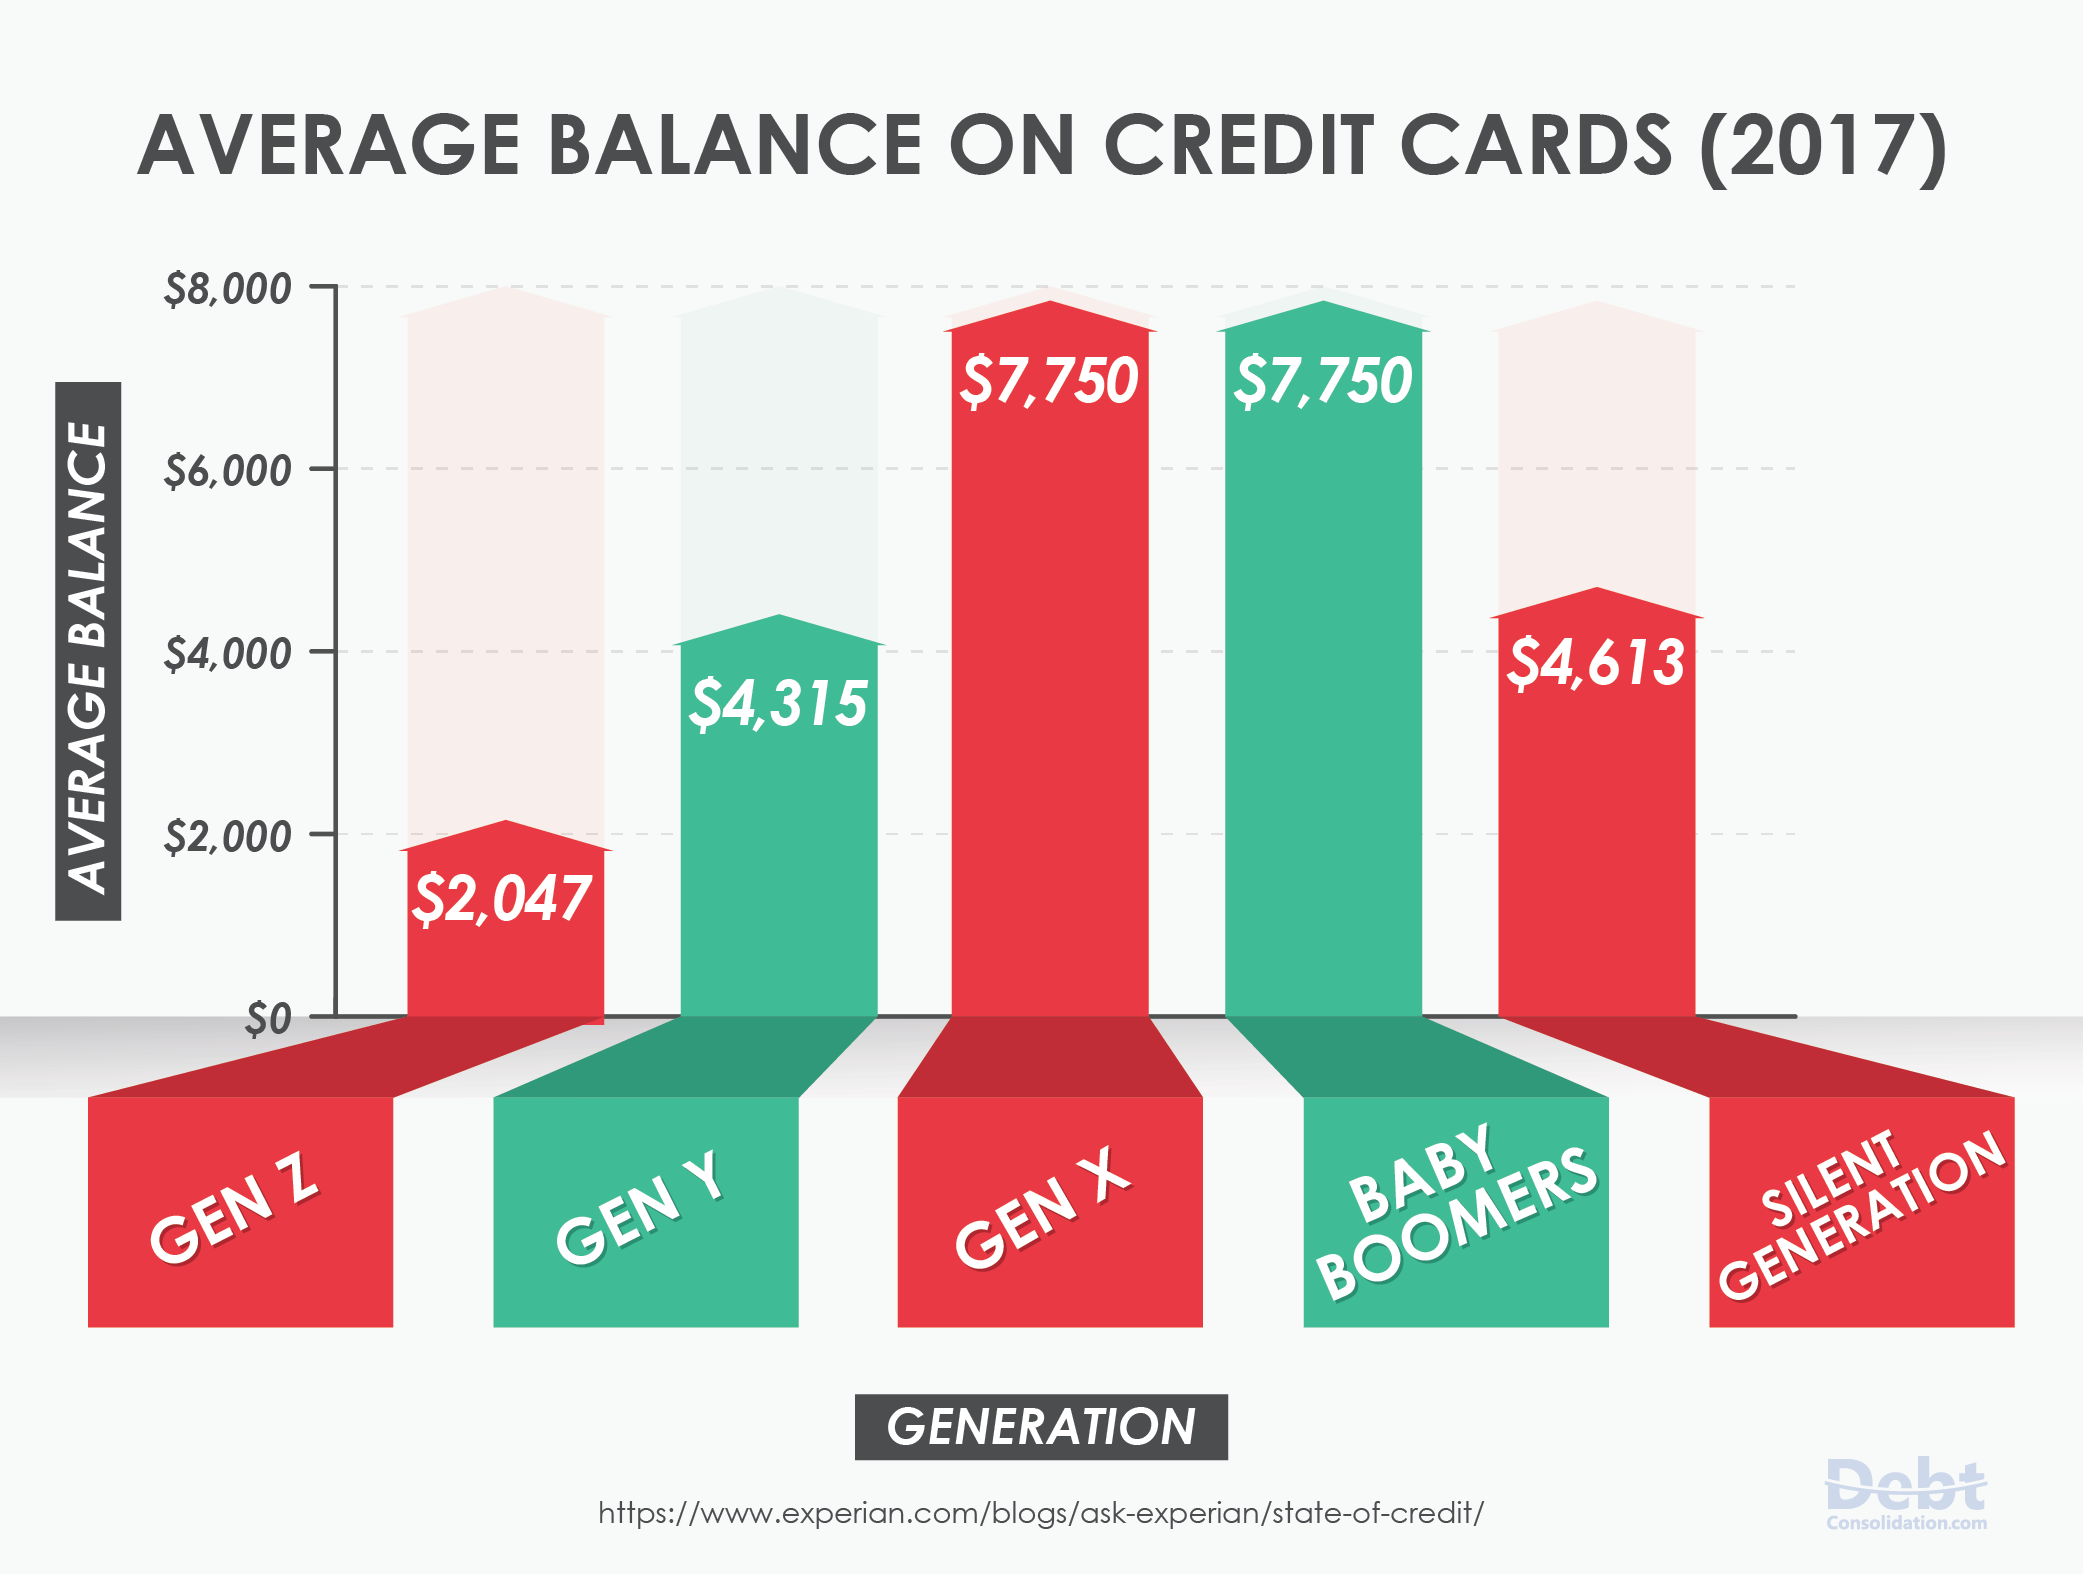 2017 Average Balance on Credit Cards